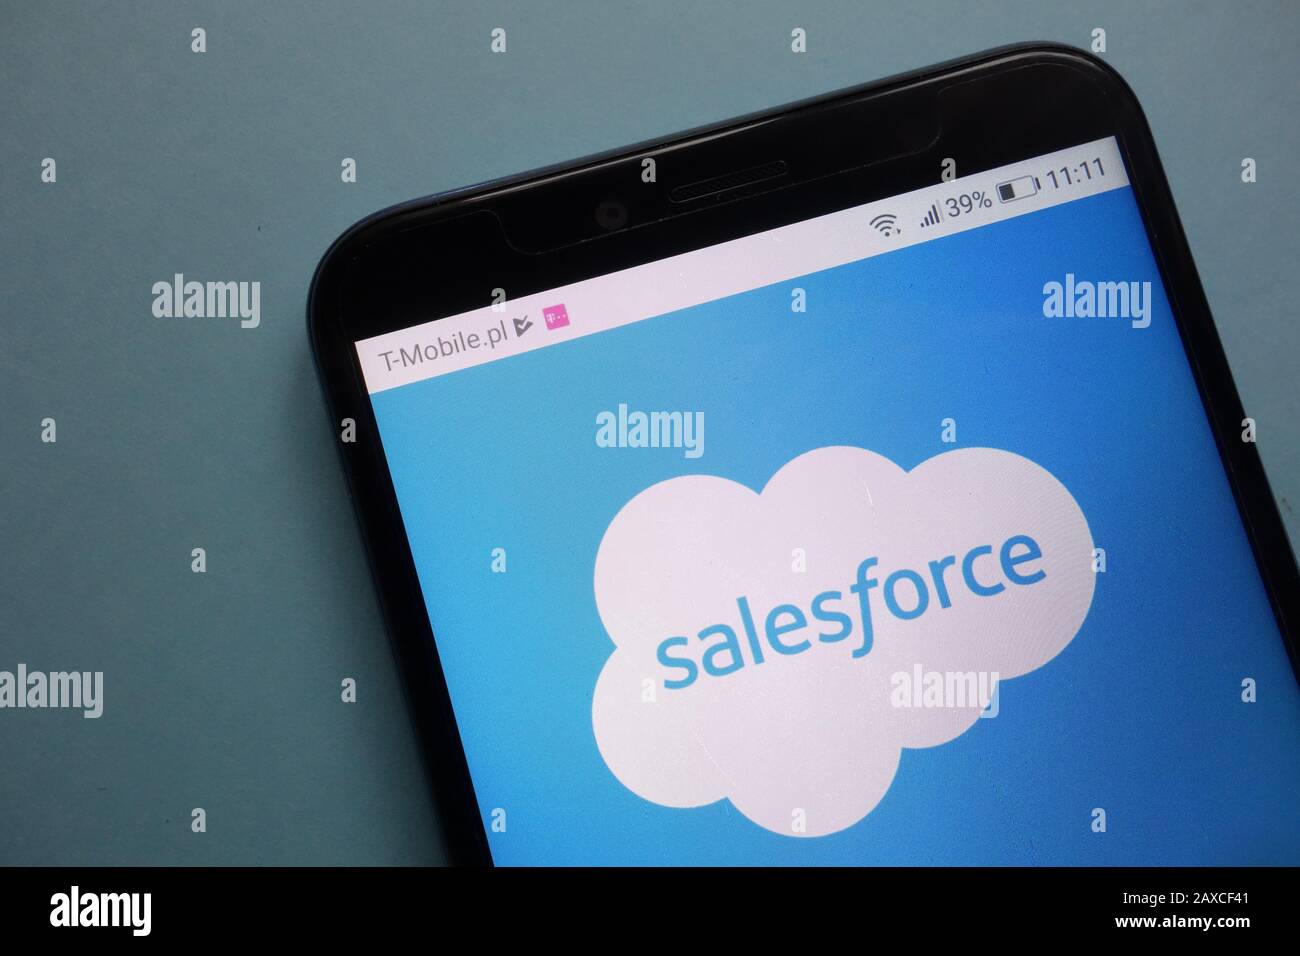 Salesforce logo on smartphone Stock Photo